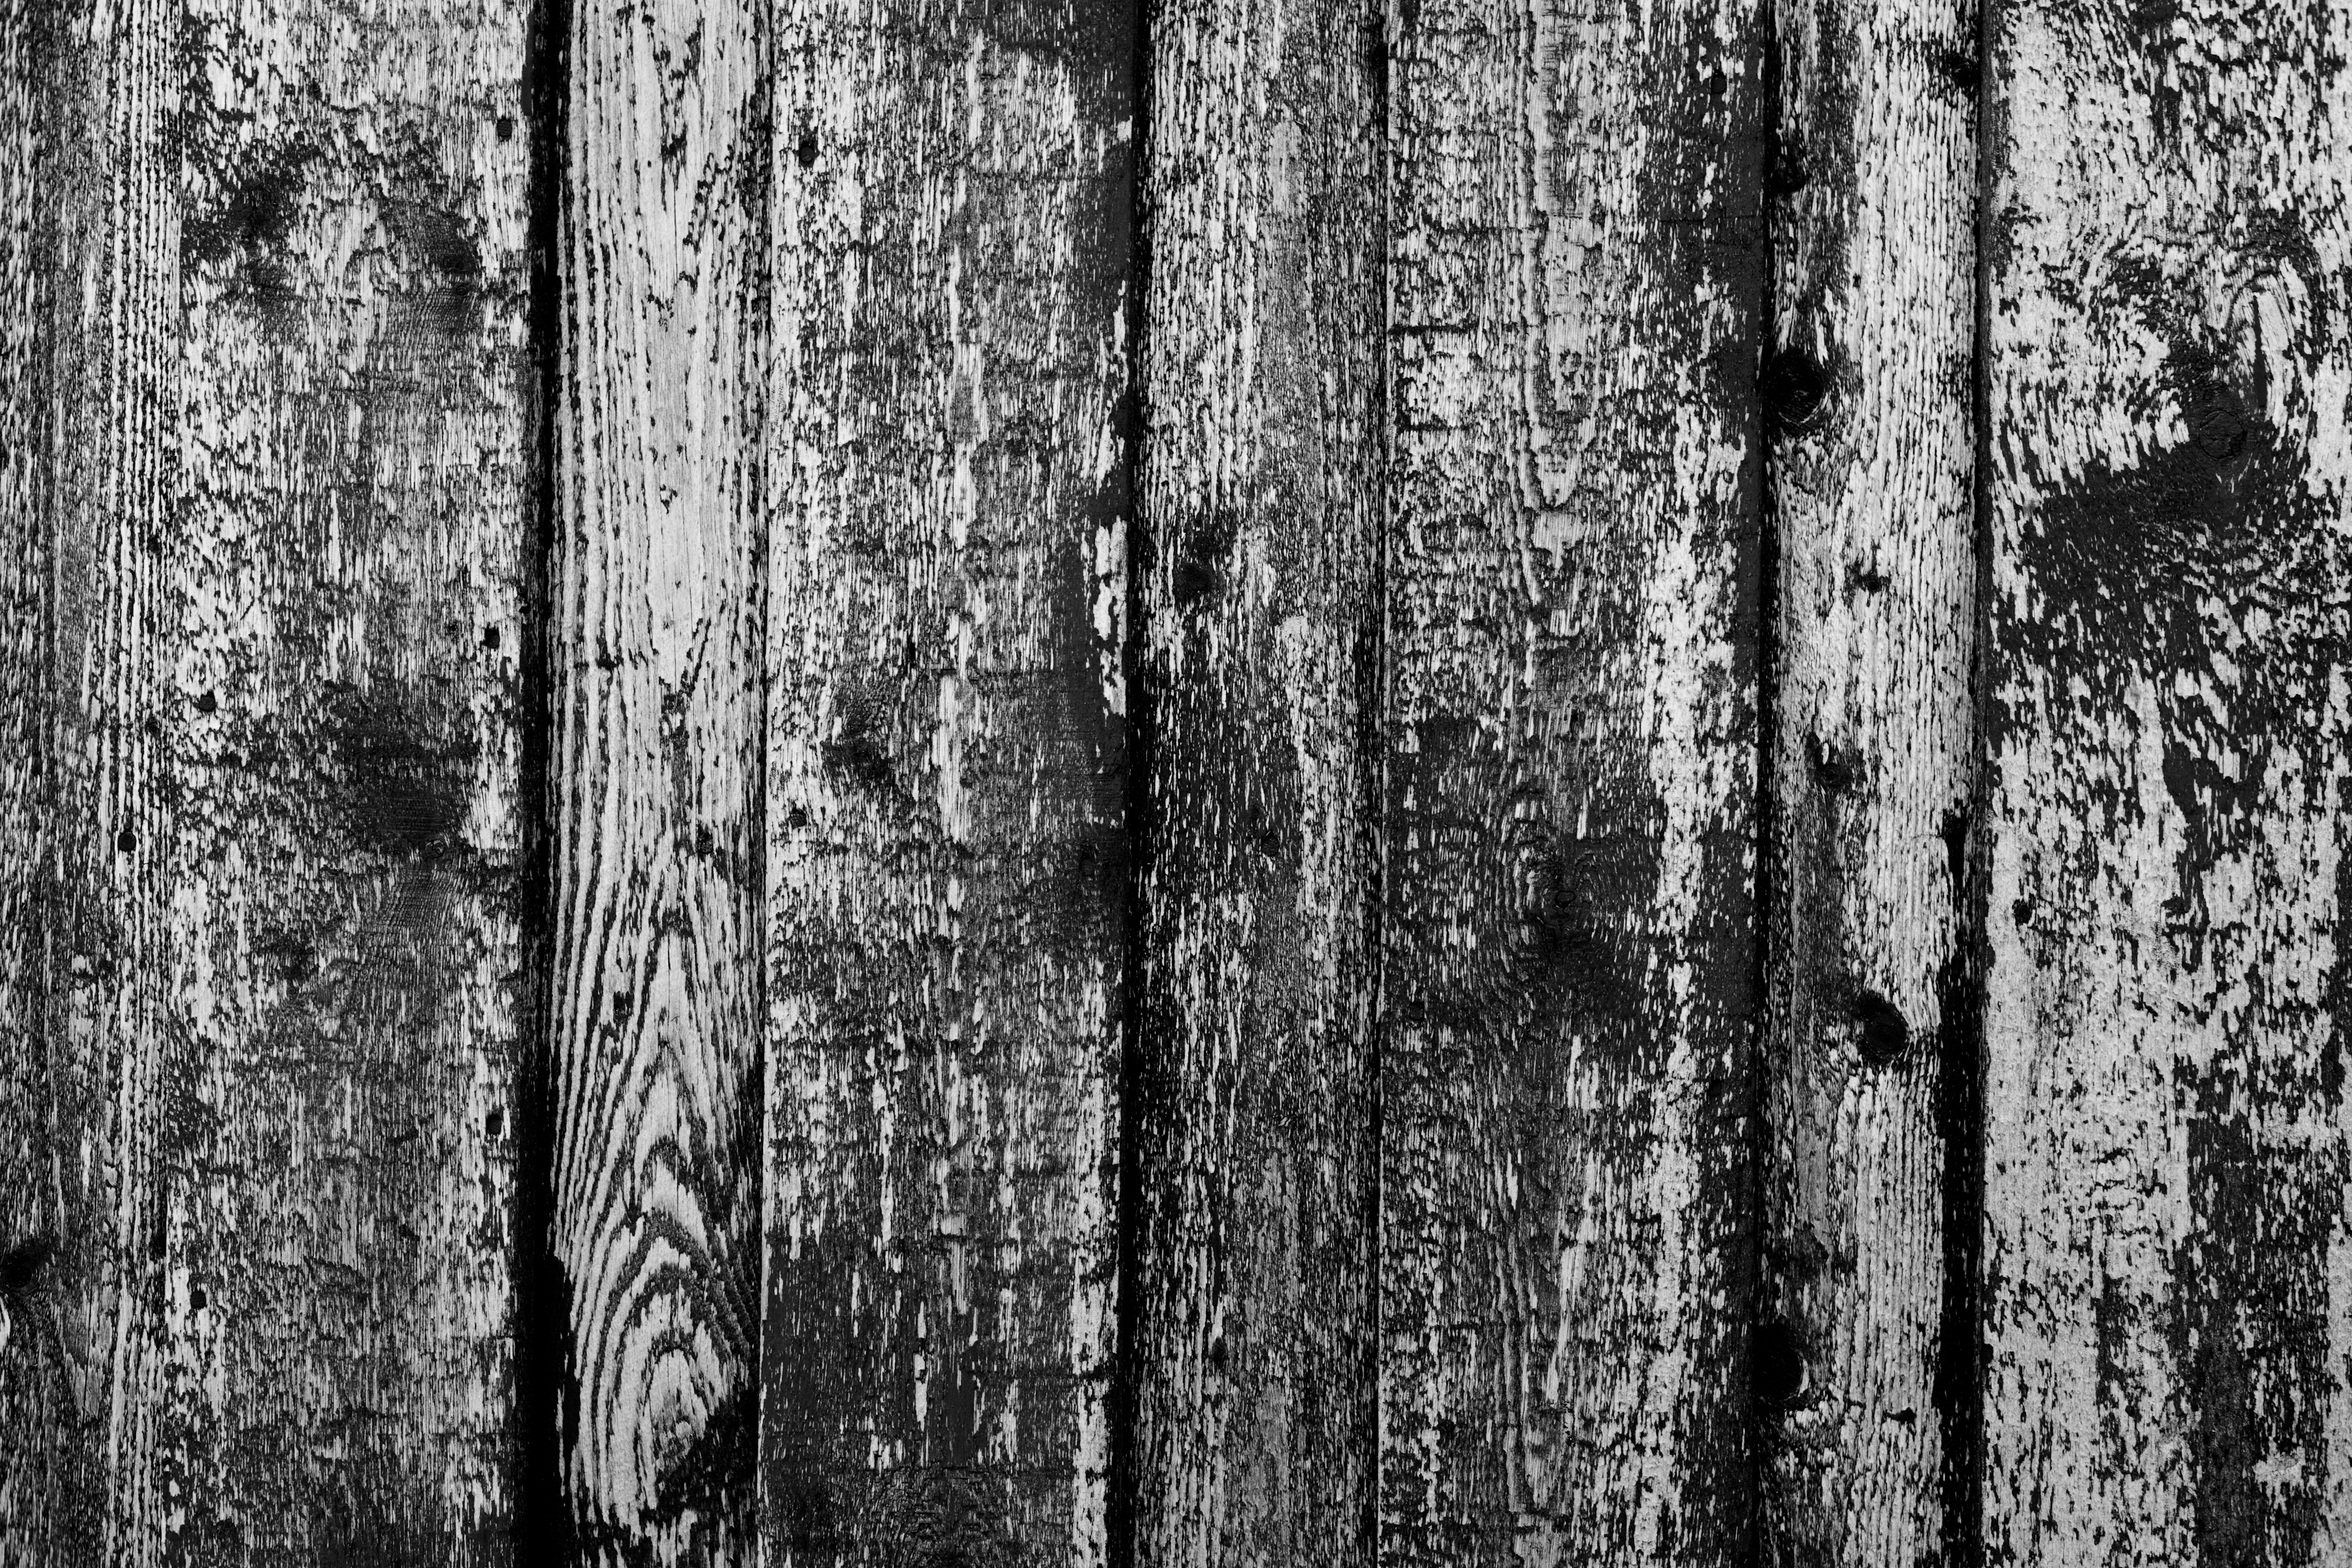 Worn wood panel photo